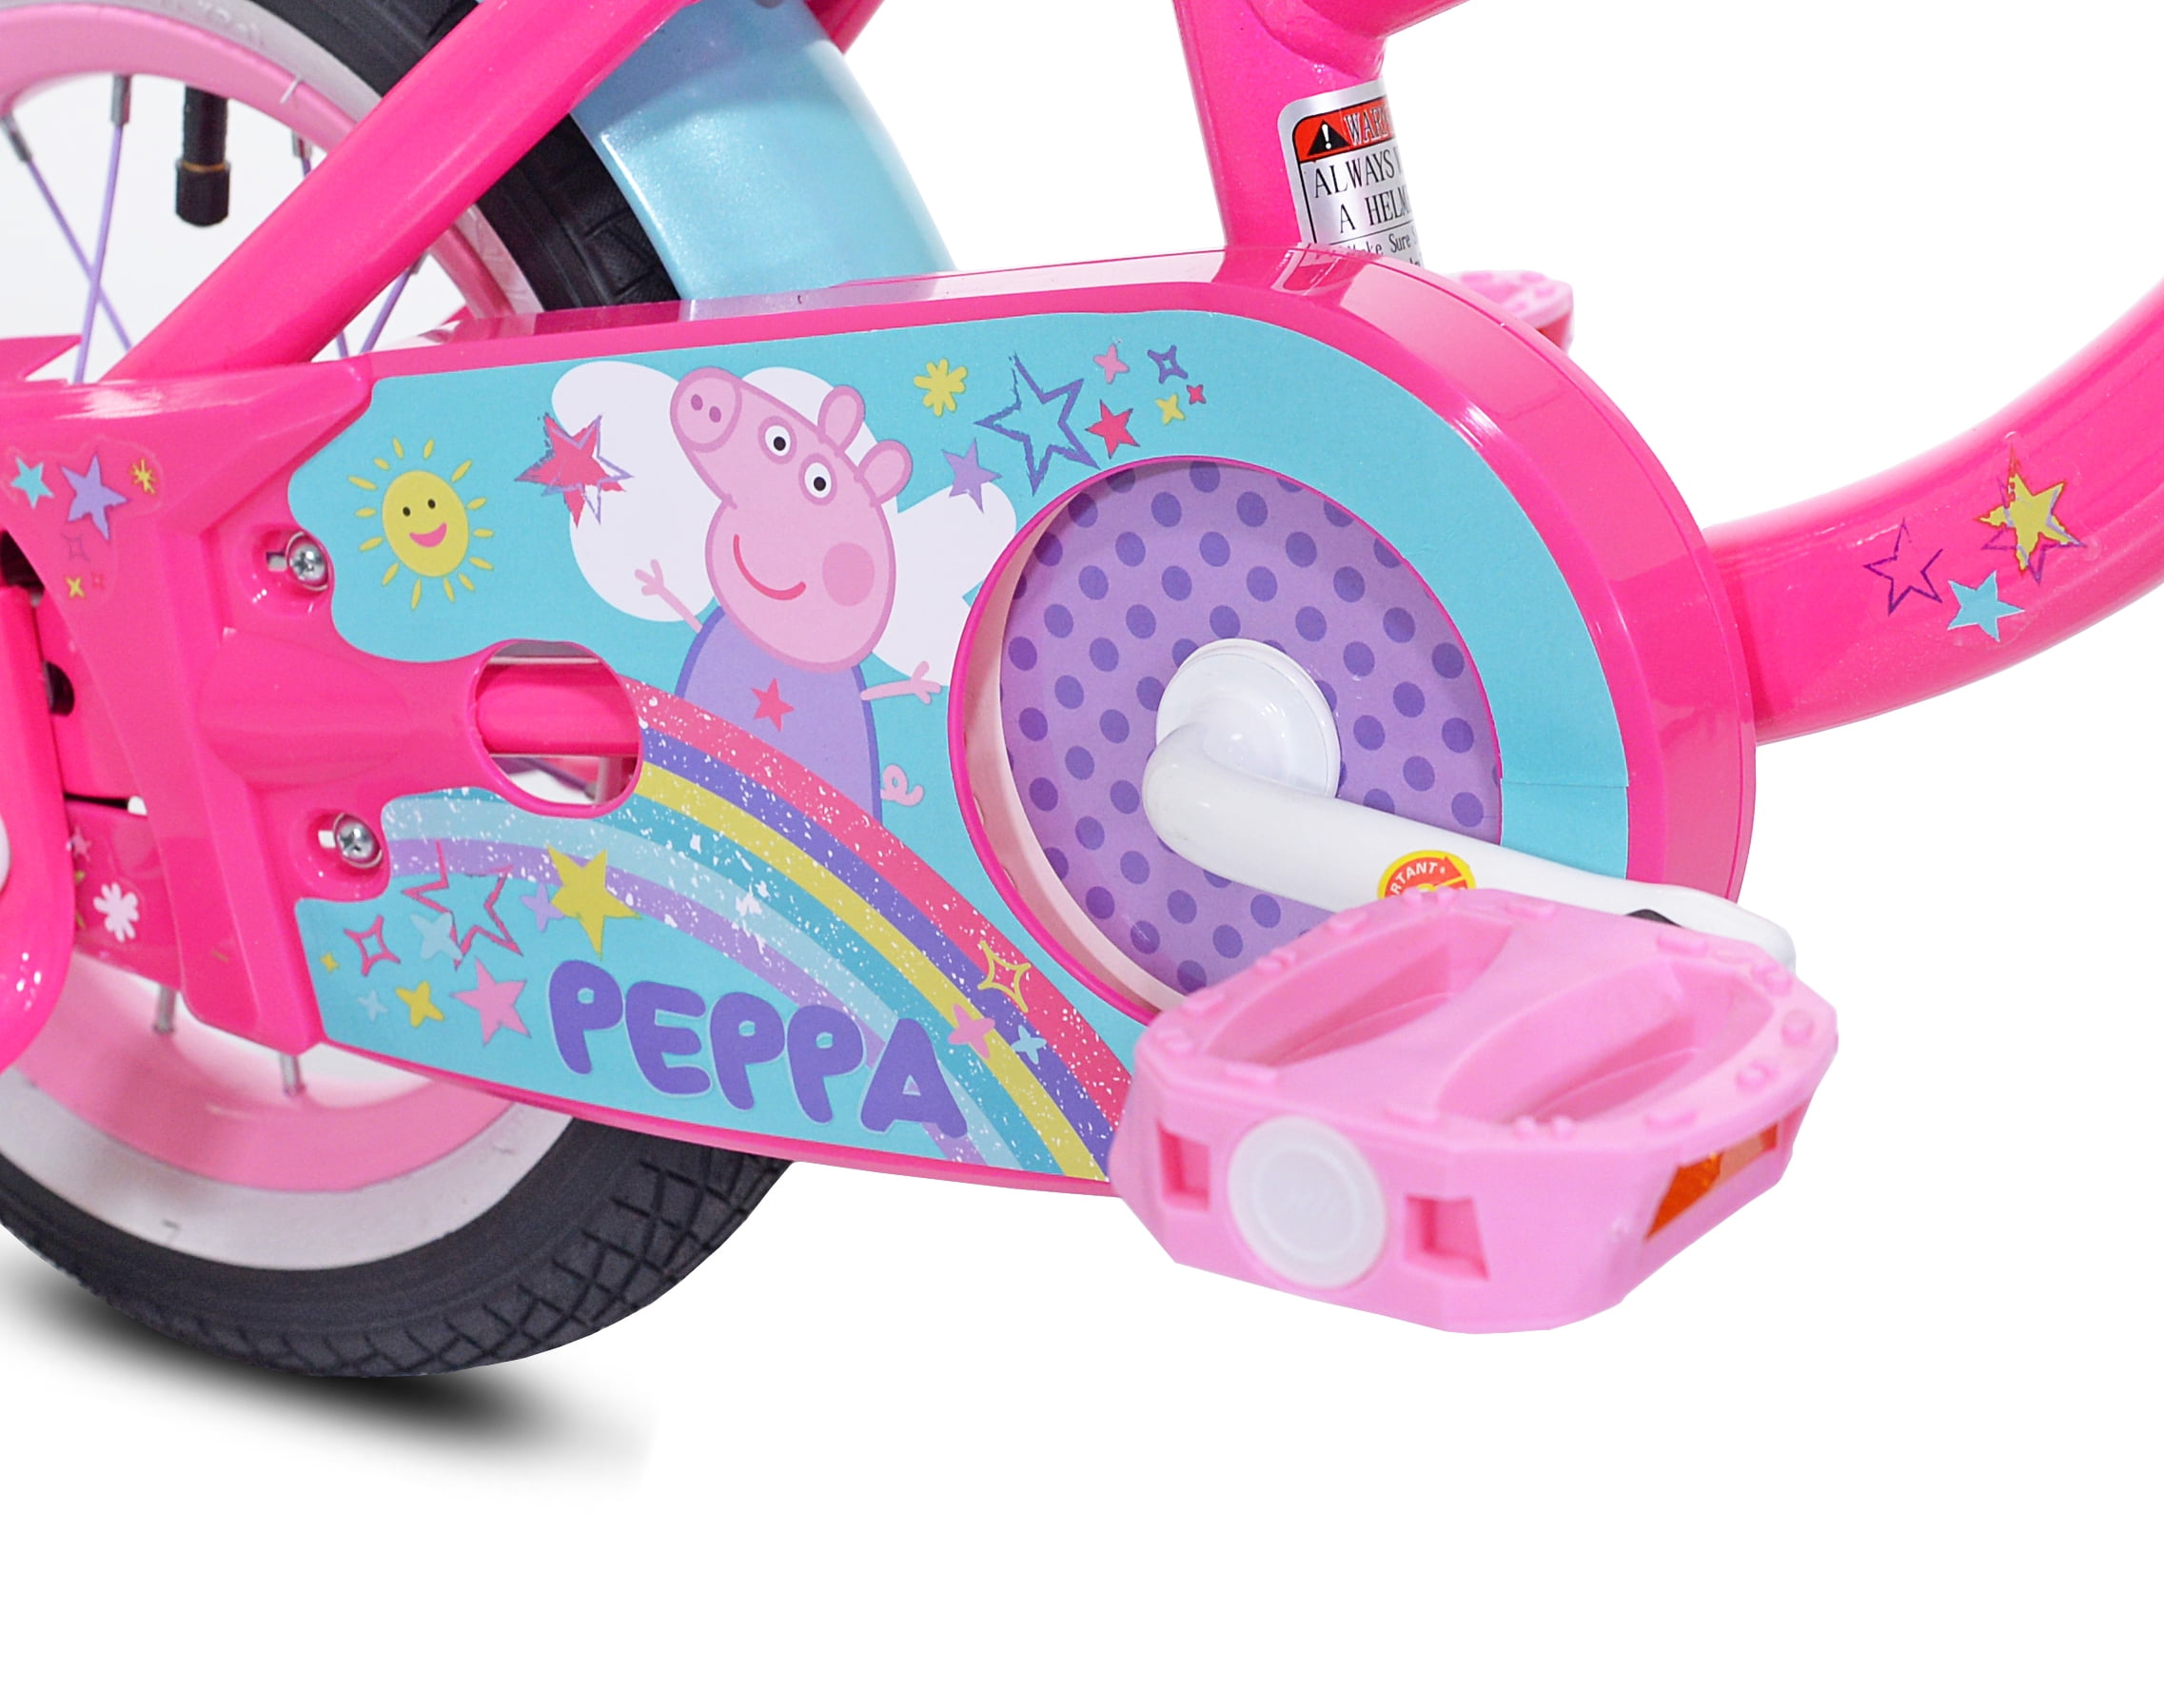 Peppa Pig 2 In 1 Convertible Kids Girl Balance Bike Pink 10" Stabilisers M004176 